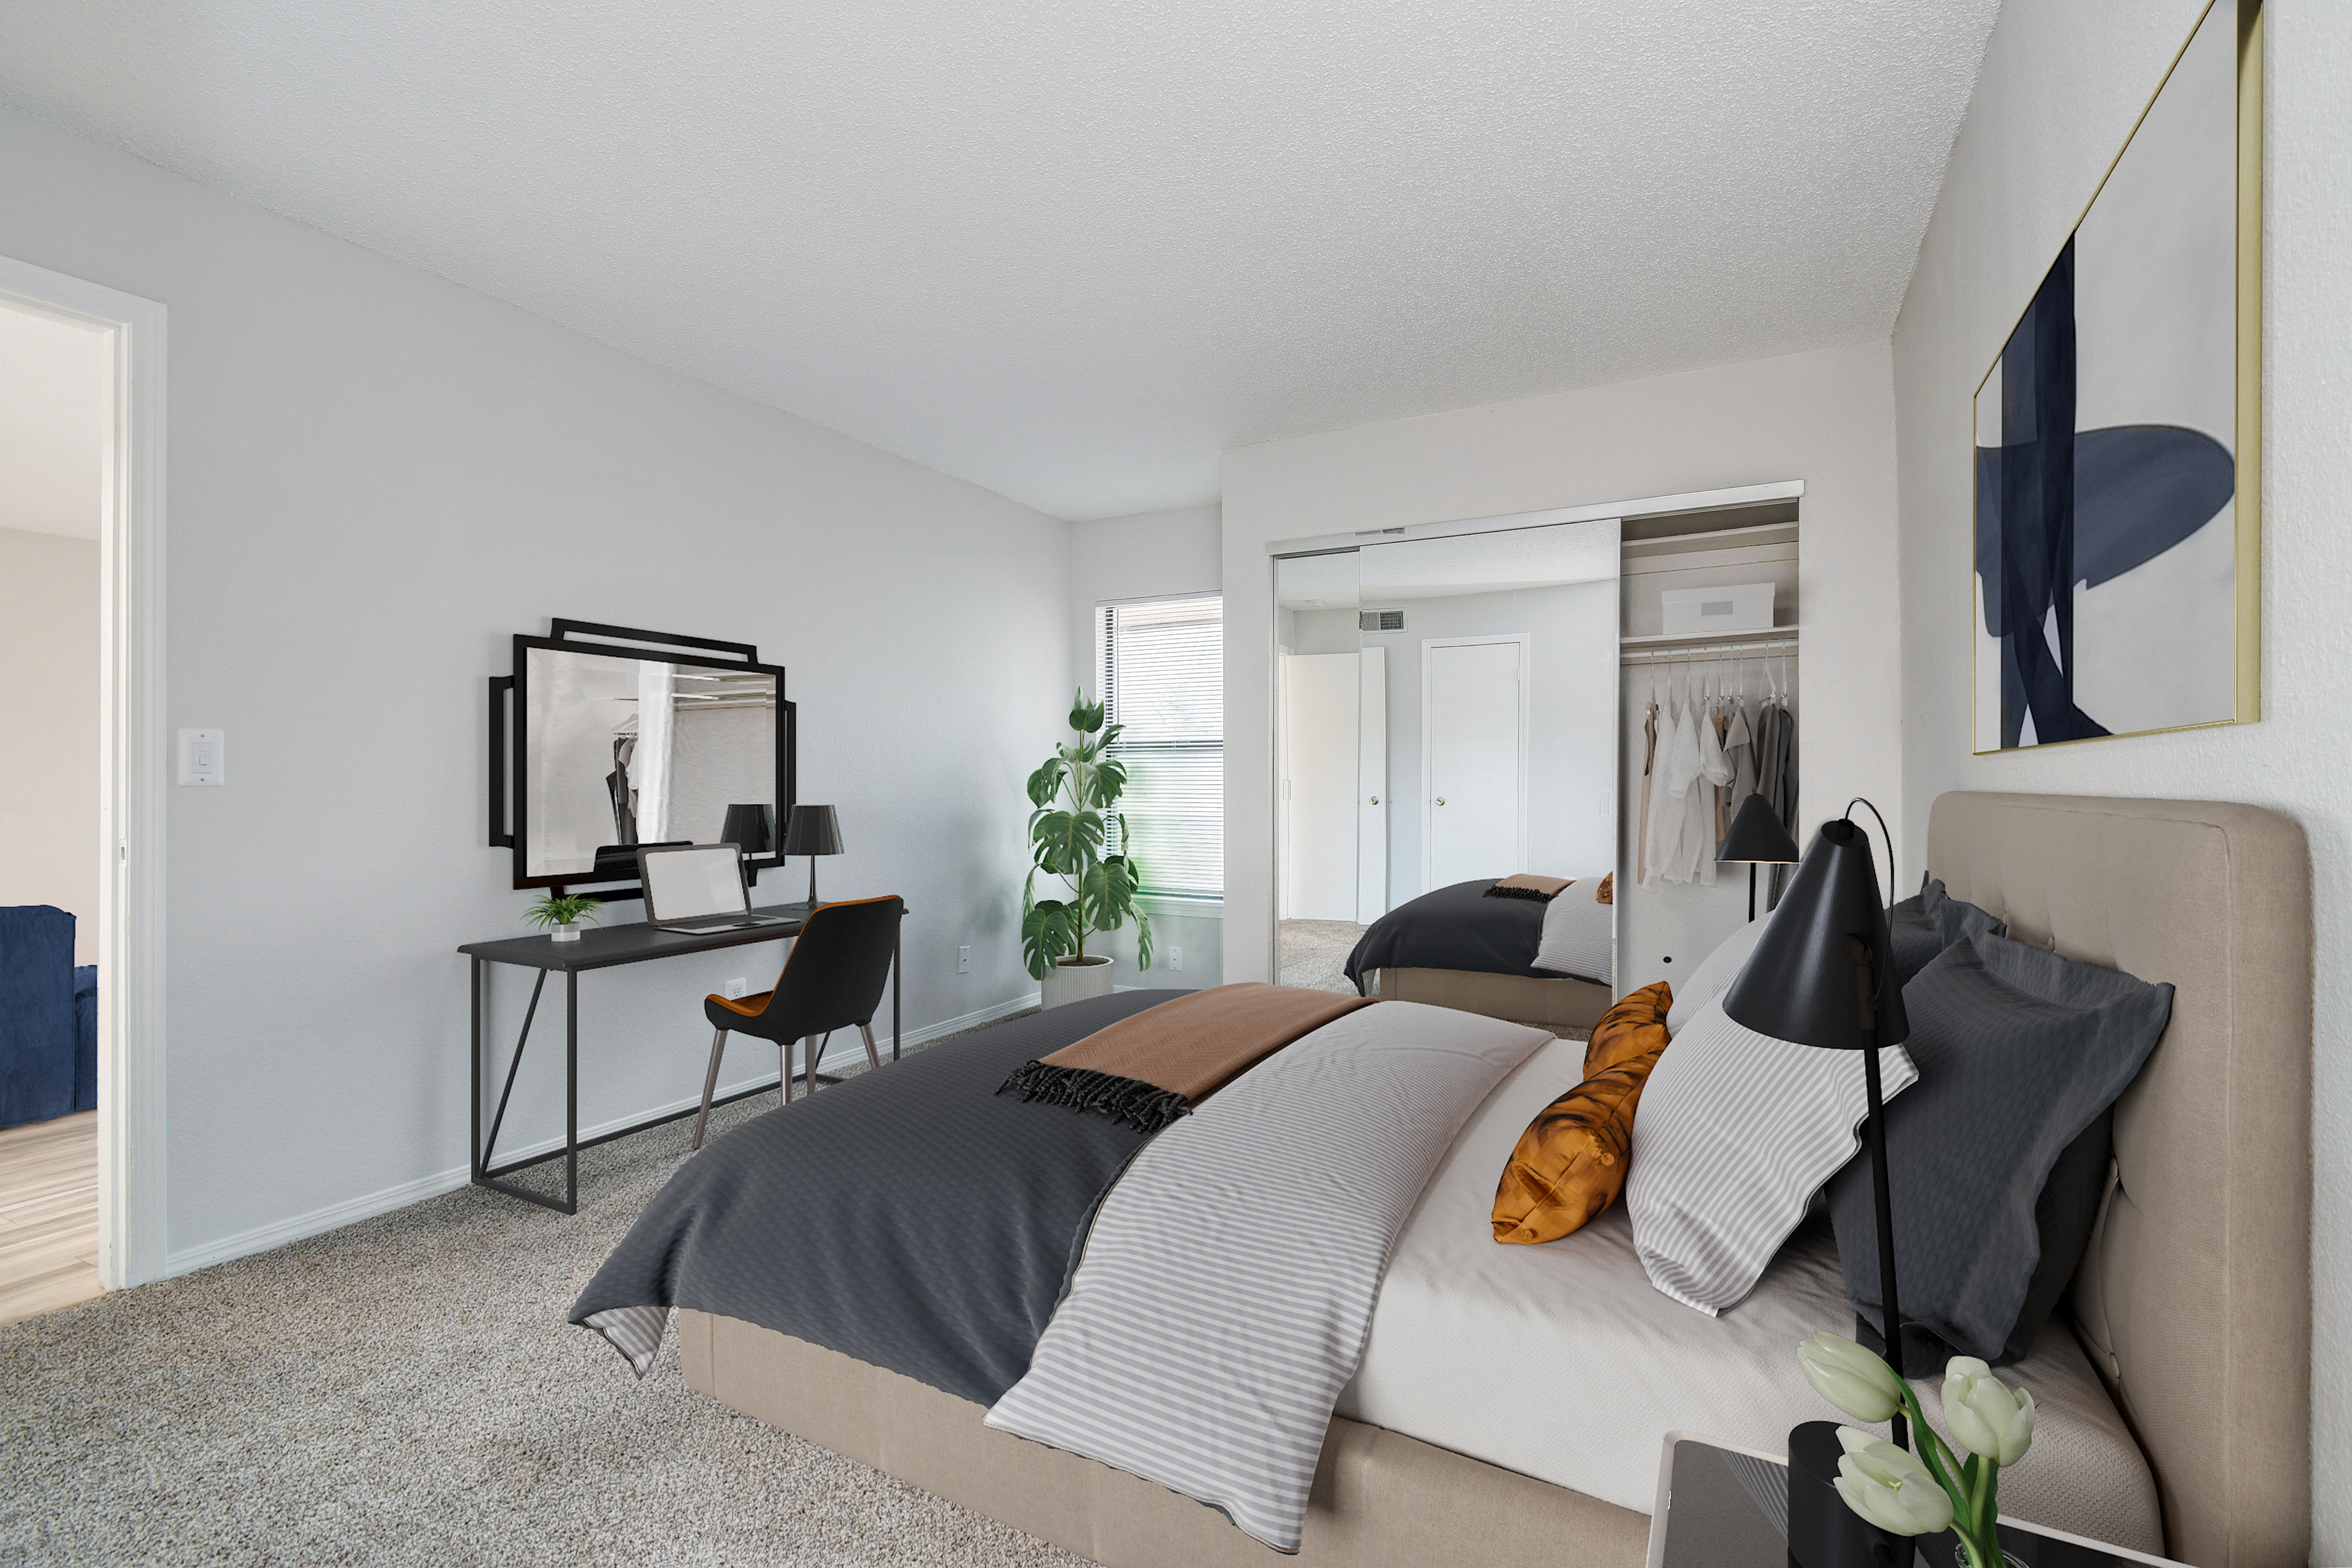 Fully furnished bedroom interior at Rainbow Ridge in Kansas City, Kansas